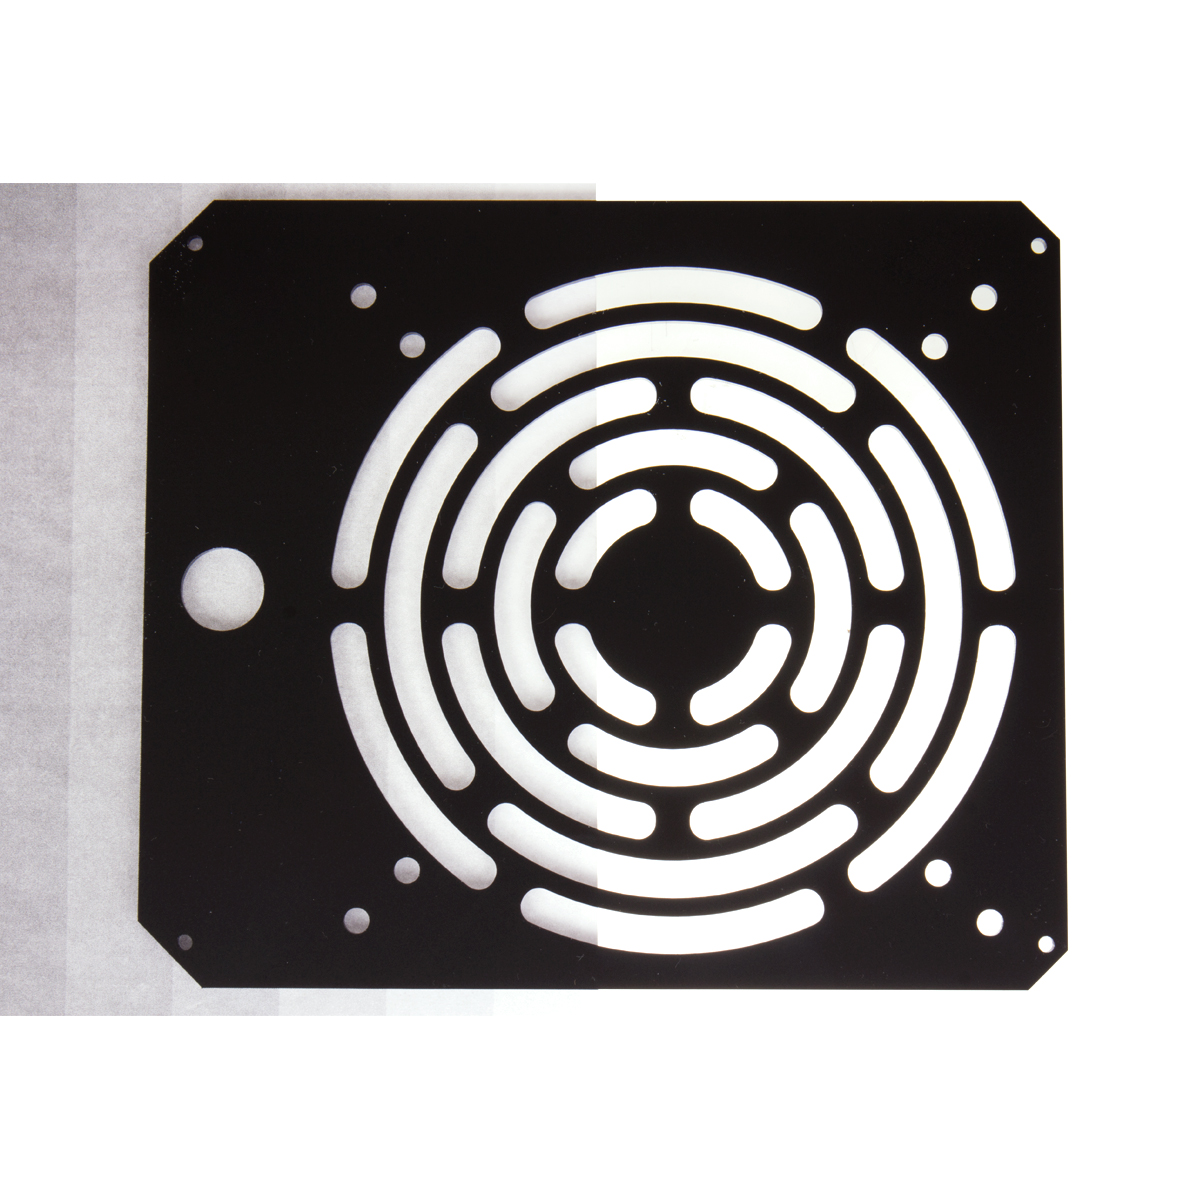 Lazer3D LZ7 Right Panel (16mm Vandal) - Midnight Black Radial